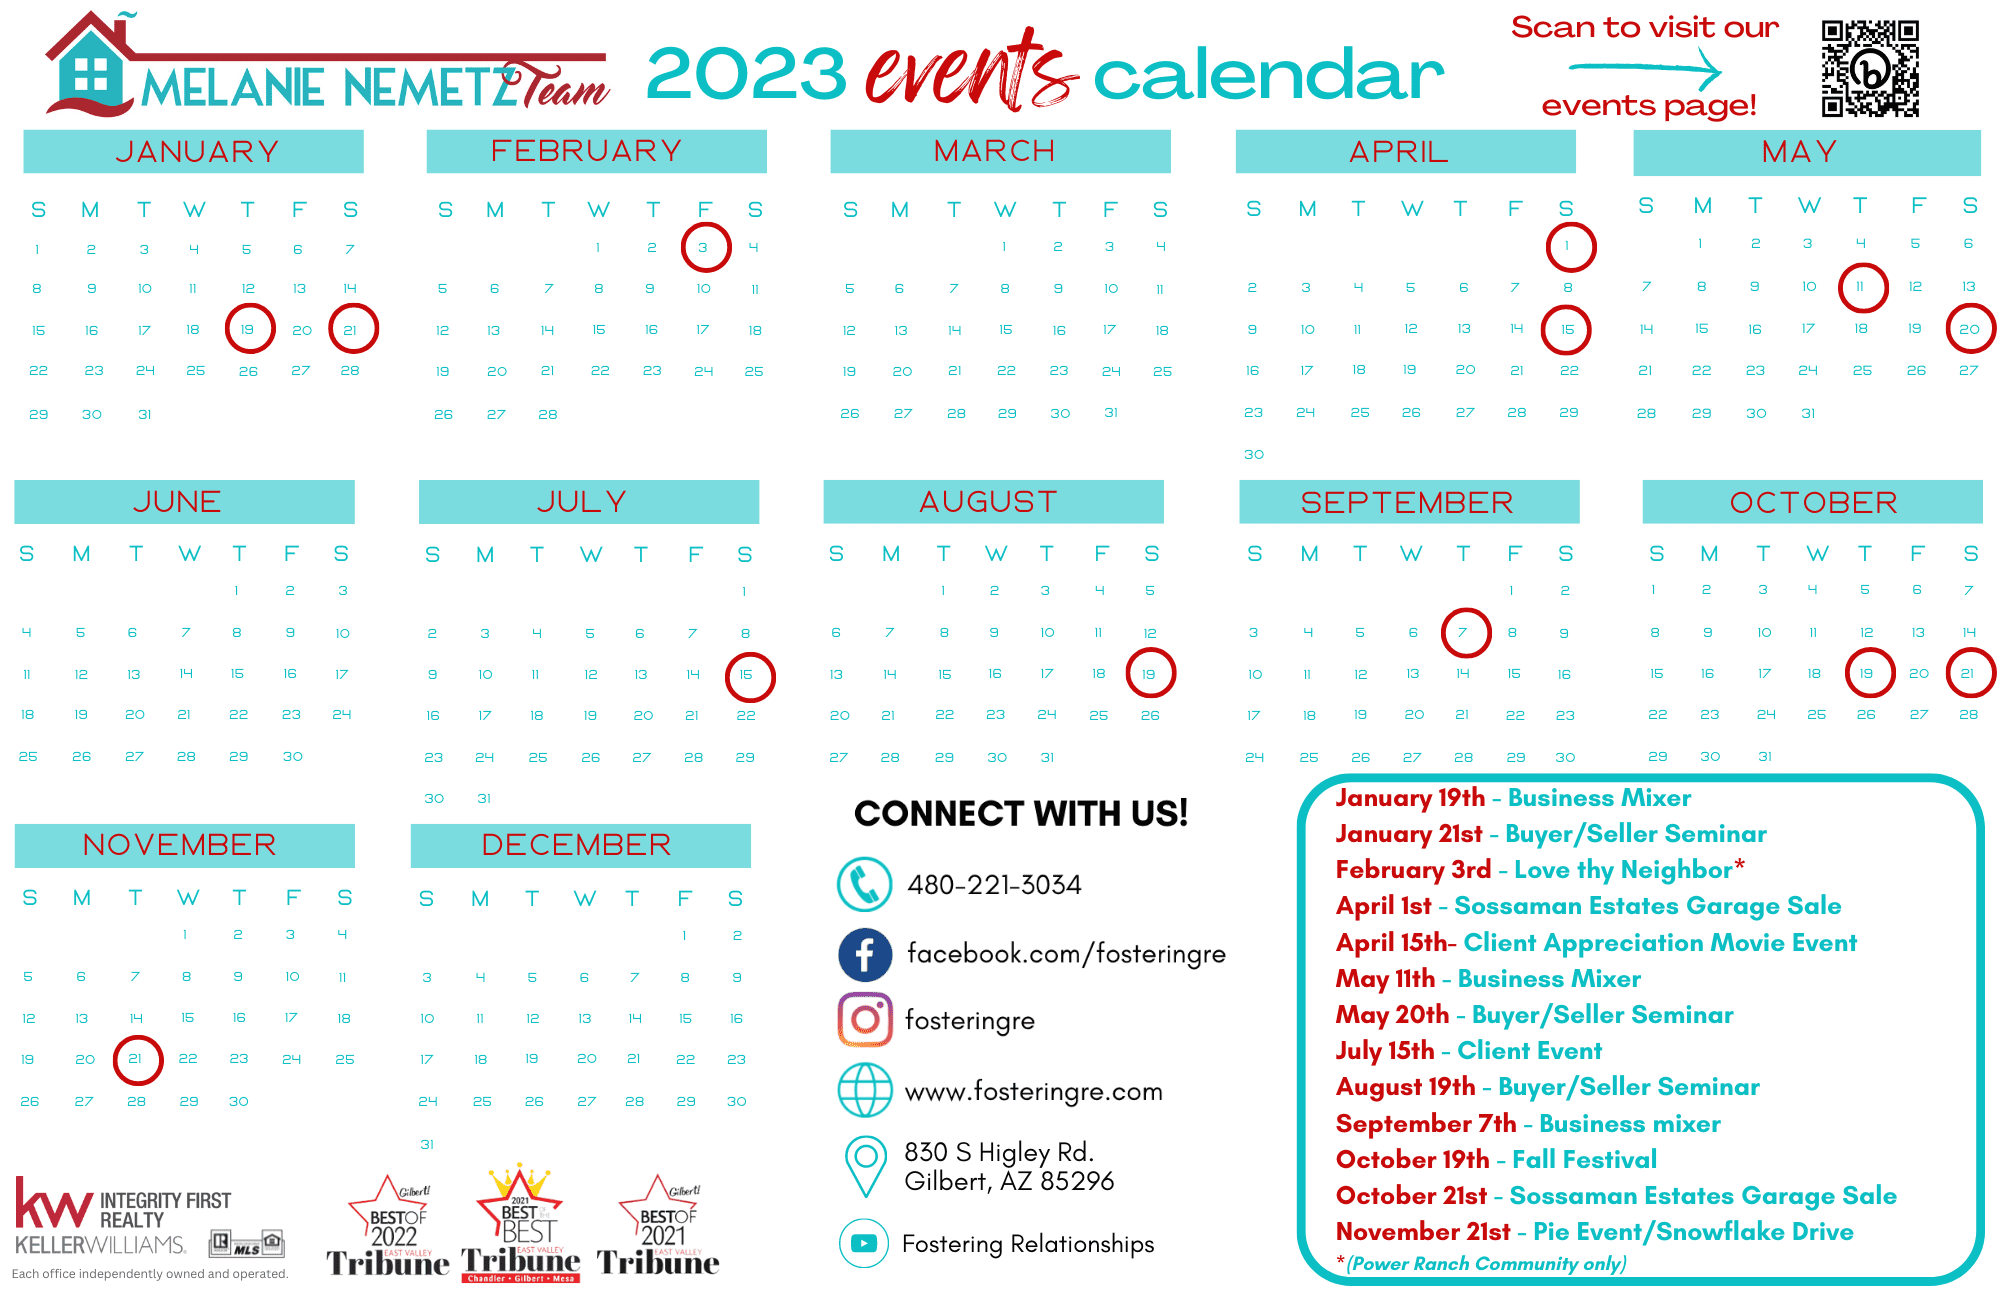 2023 Events Calendar -updated